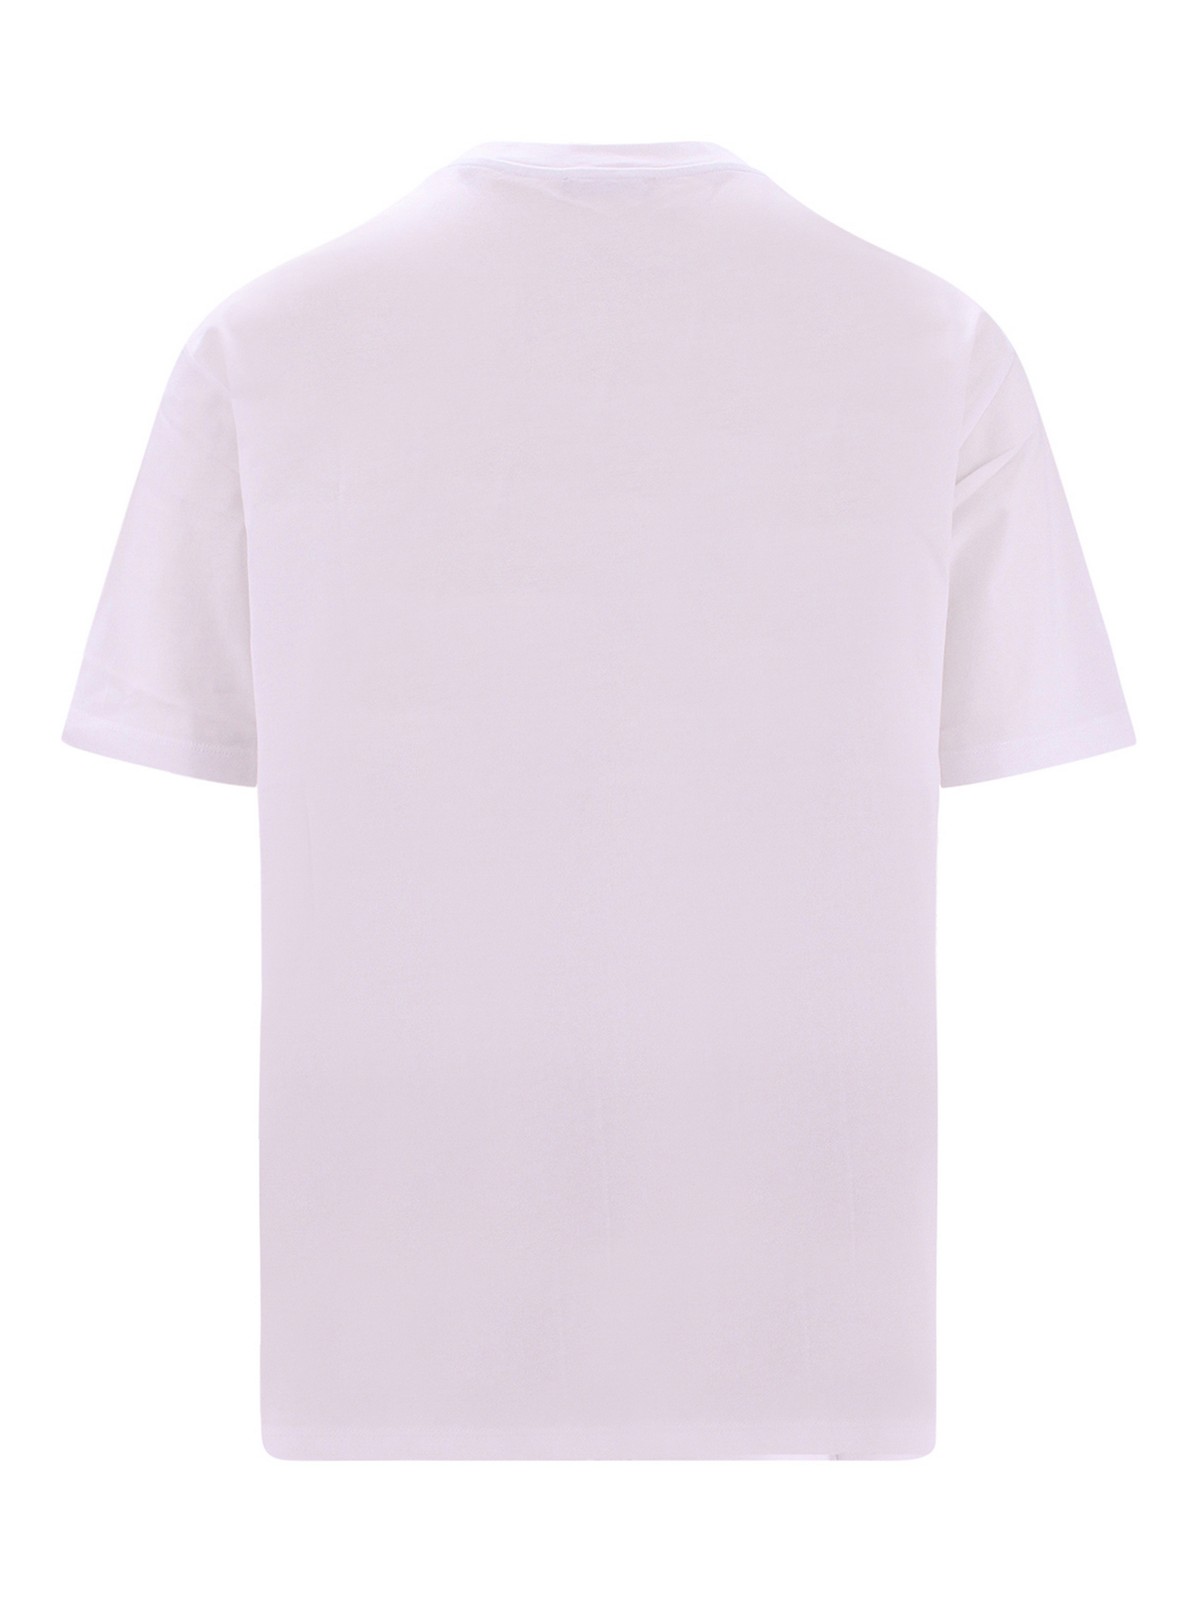 Shop Balmain Camiseta - Blanco